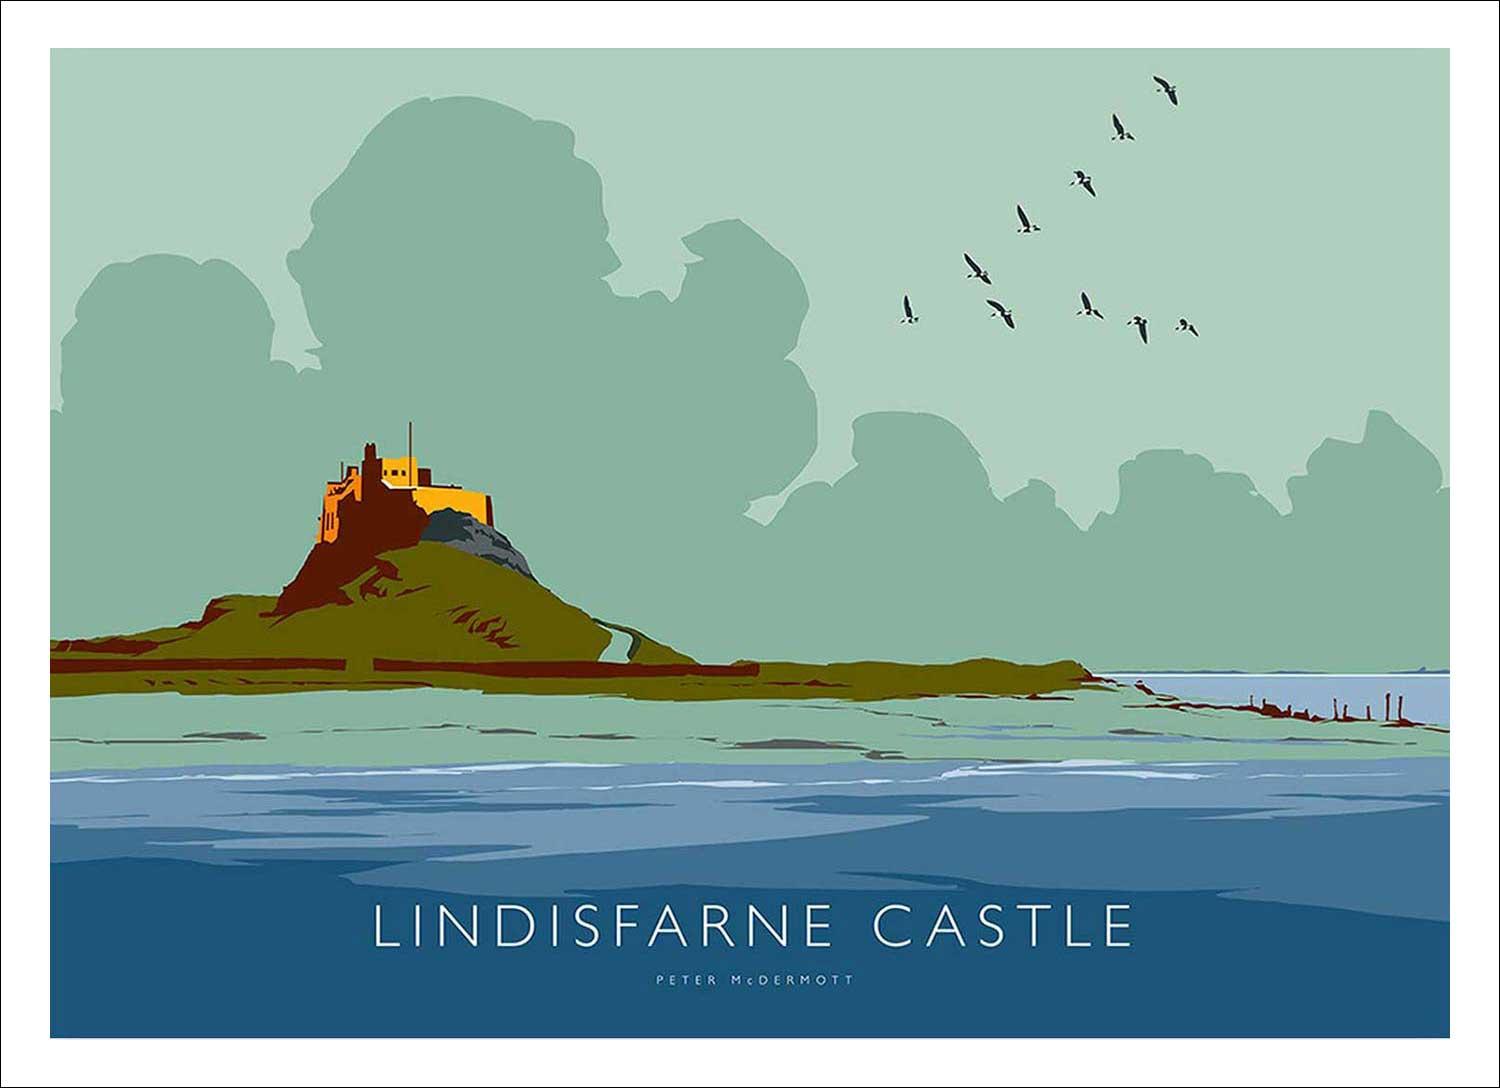 Lindisfarne Castle Art Print from an original illustration by artist Peter McDermott